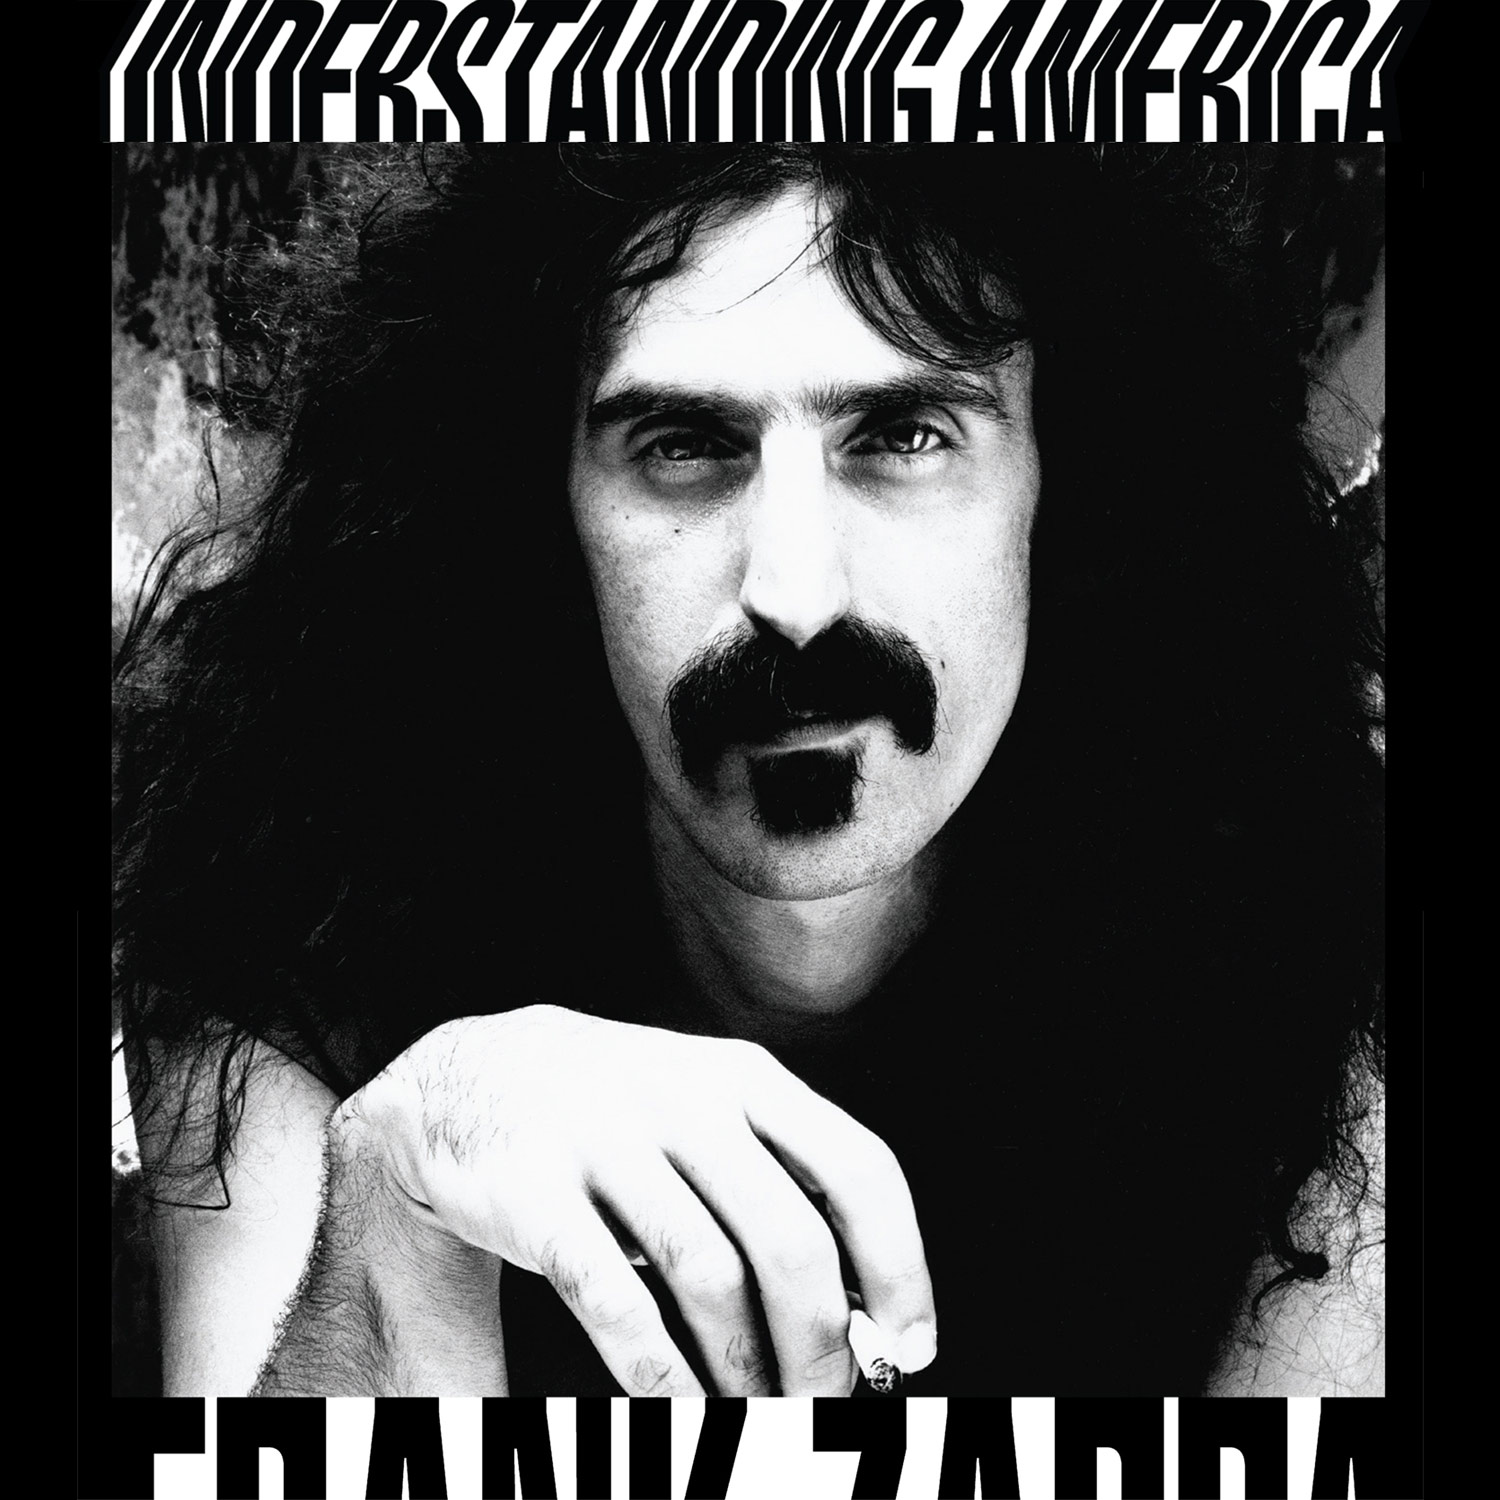 Art for Central Scrutinizer by Frank Zappa